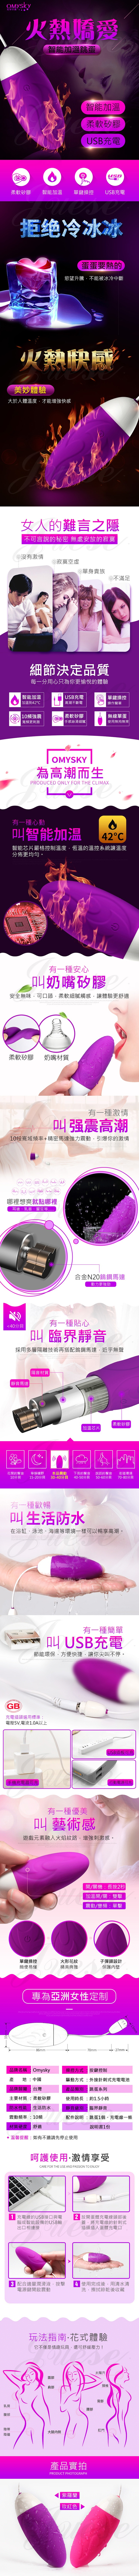 omysky-嬌愛 火熱加溫USB充電10段變頻震動矽膠跳蛋-玫紫色